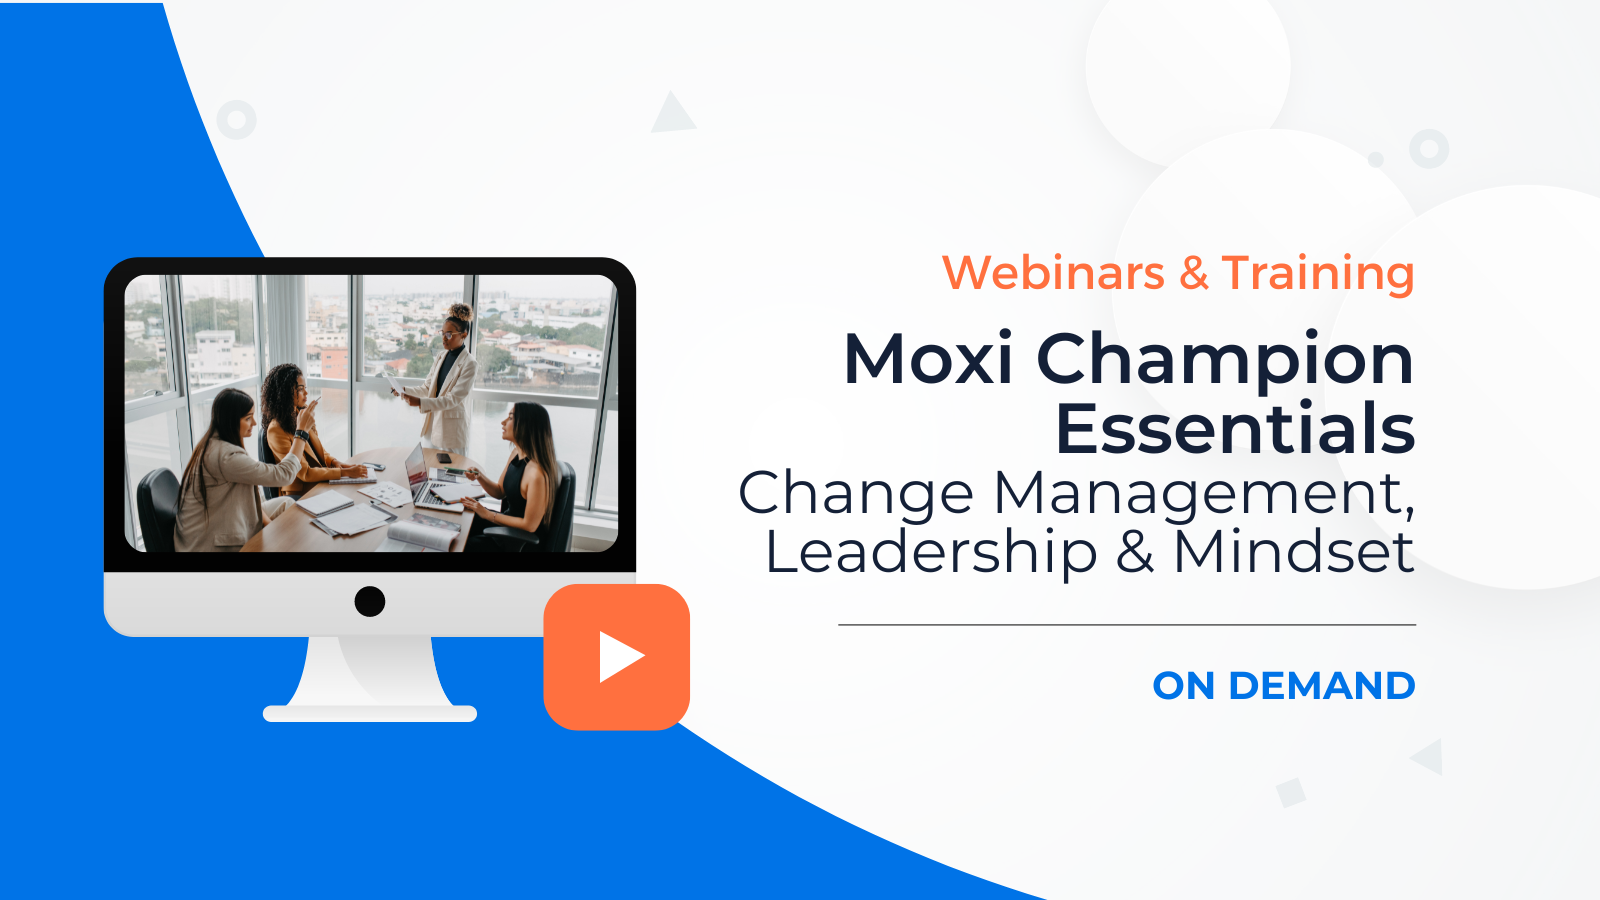 [WATCH NOW] Moxi Champion Essentials – Change Management, Leadership and Mindset